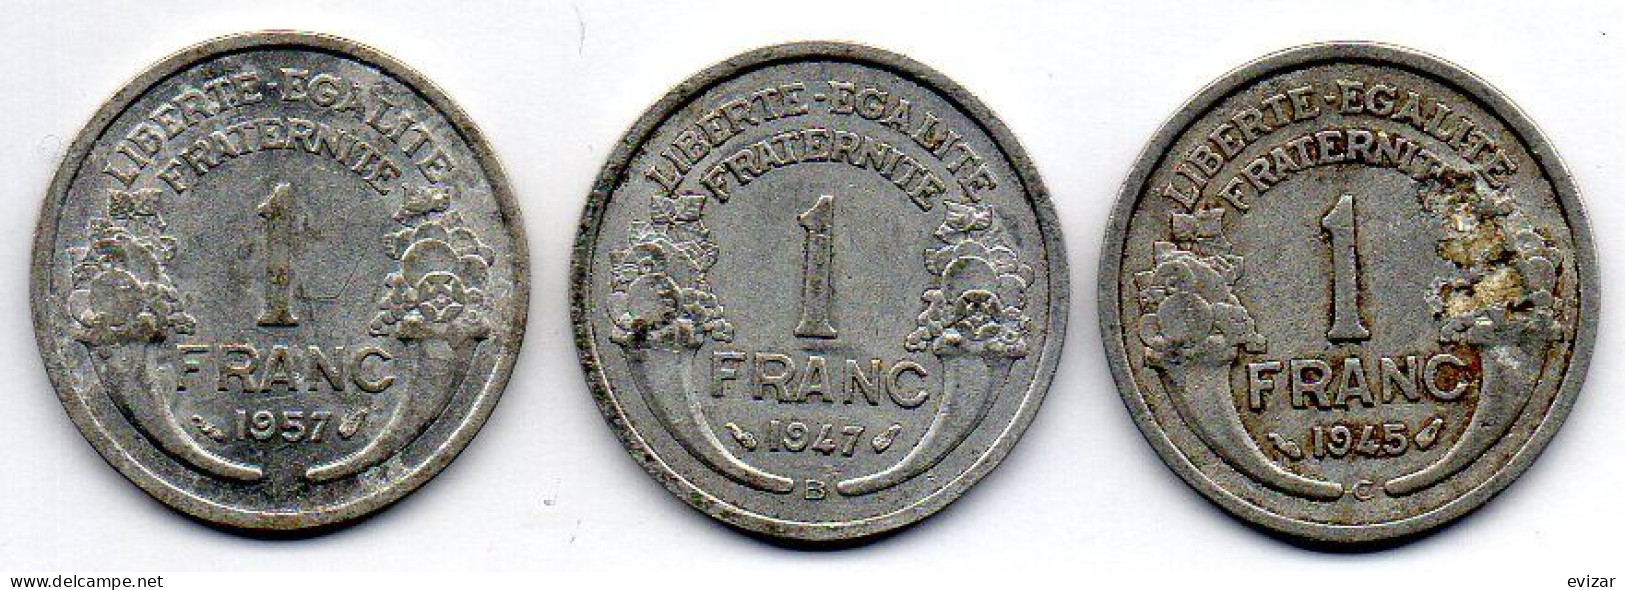 FRANCE, Set Of Three Coins 1 Franc, Aluminum, Year 1957, 1947-B, 1945-C, KM # 885a.1, 885a.2, 885a.3 - 1 Franc